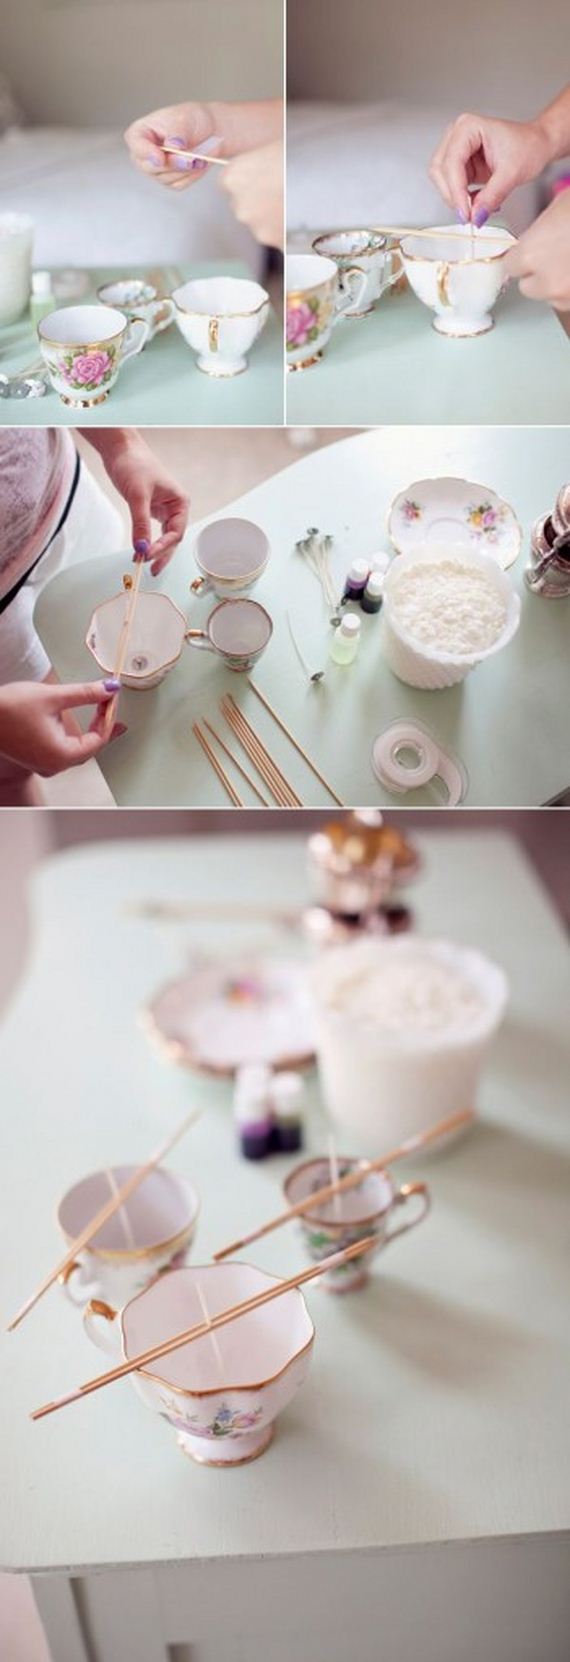 08-Tutorials-How-to-Make-Homemade-Candles